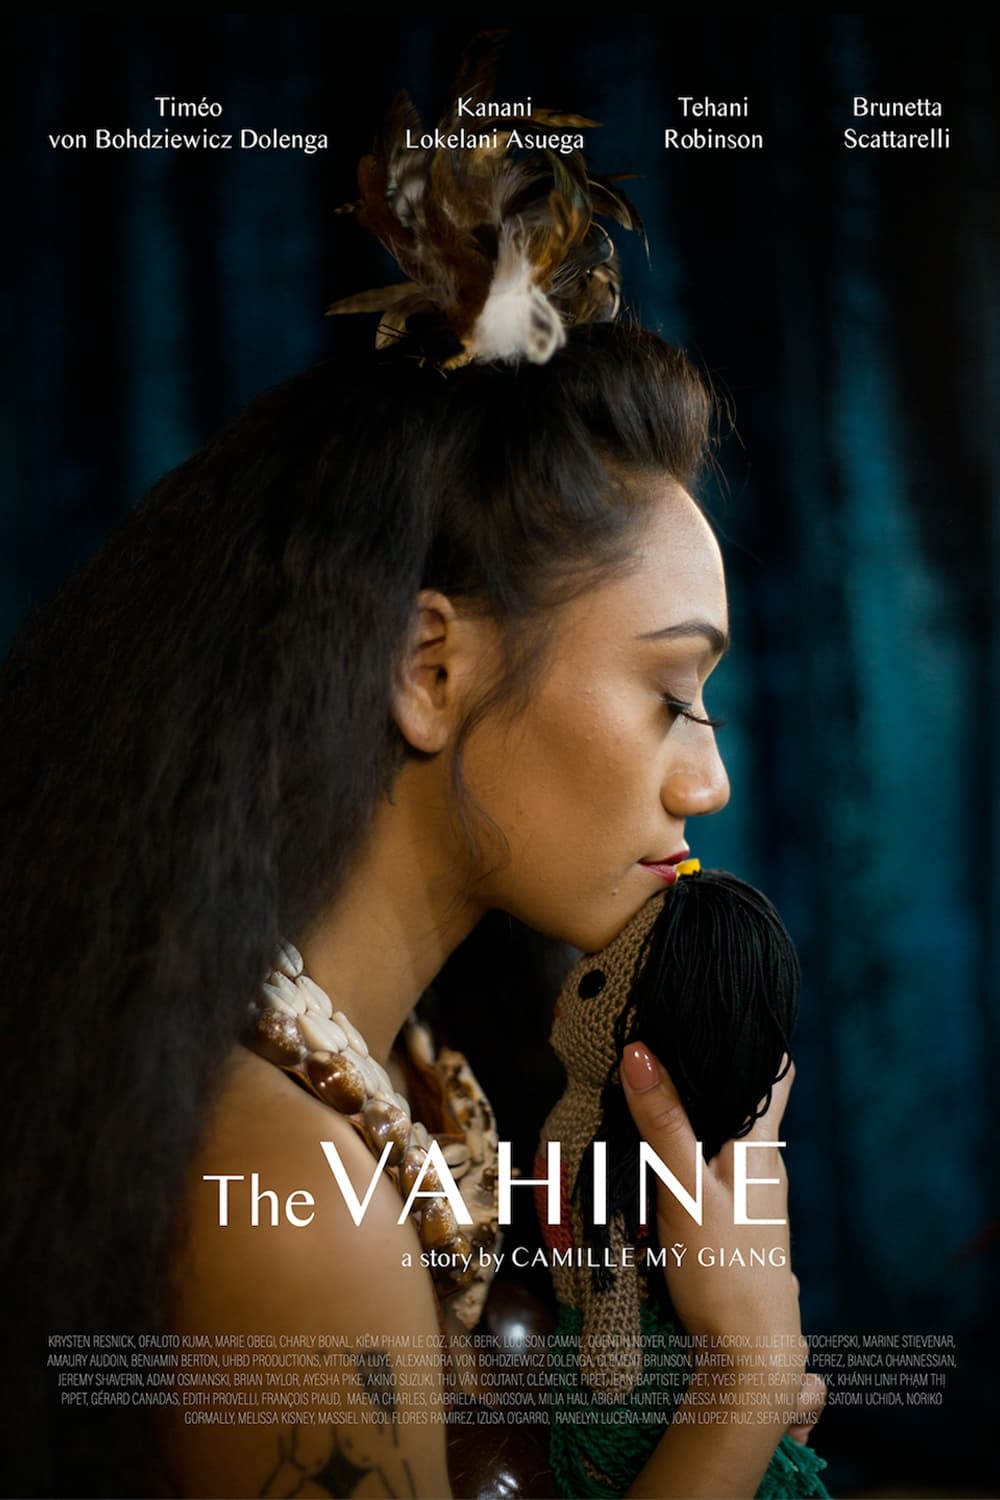 The Vahine